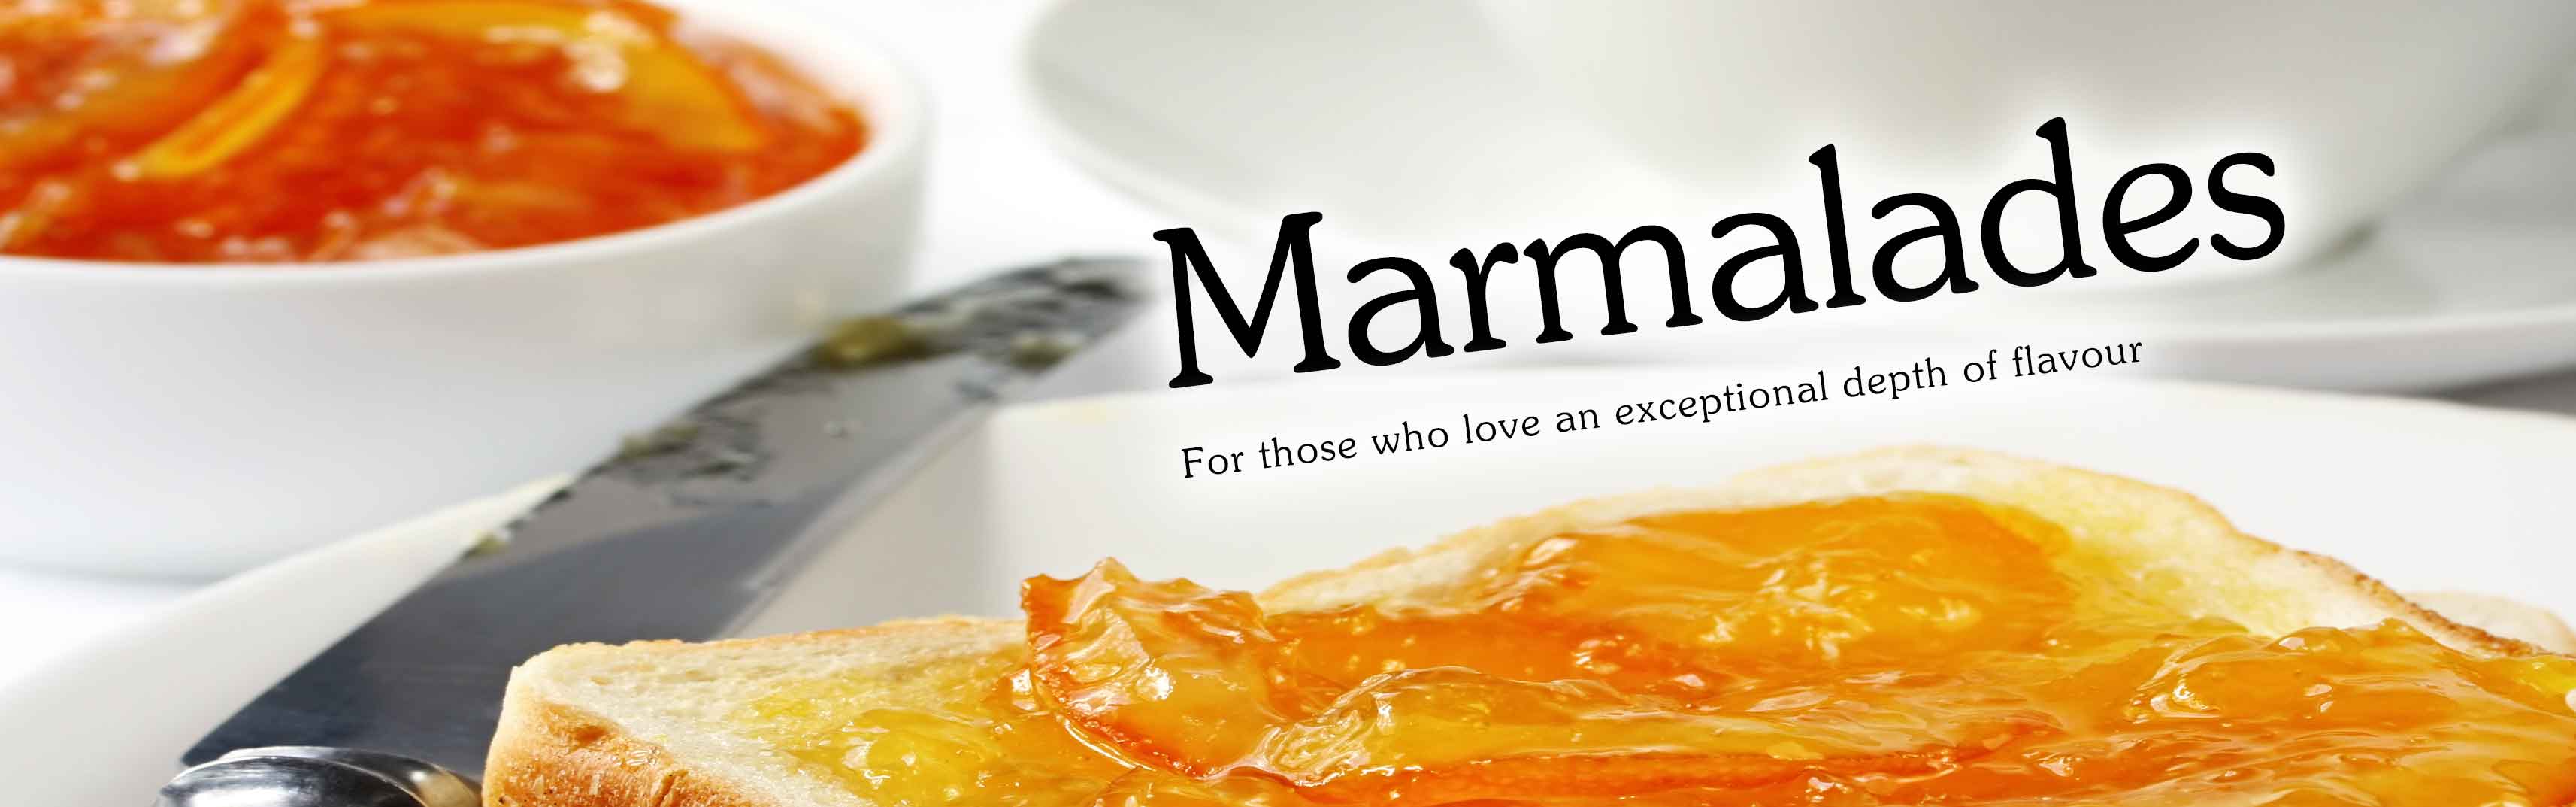 01.03 Marmalade